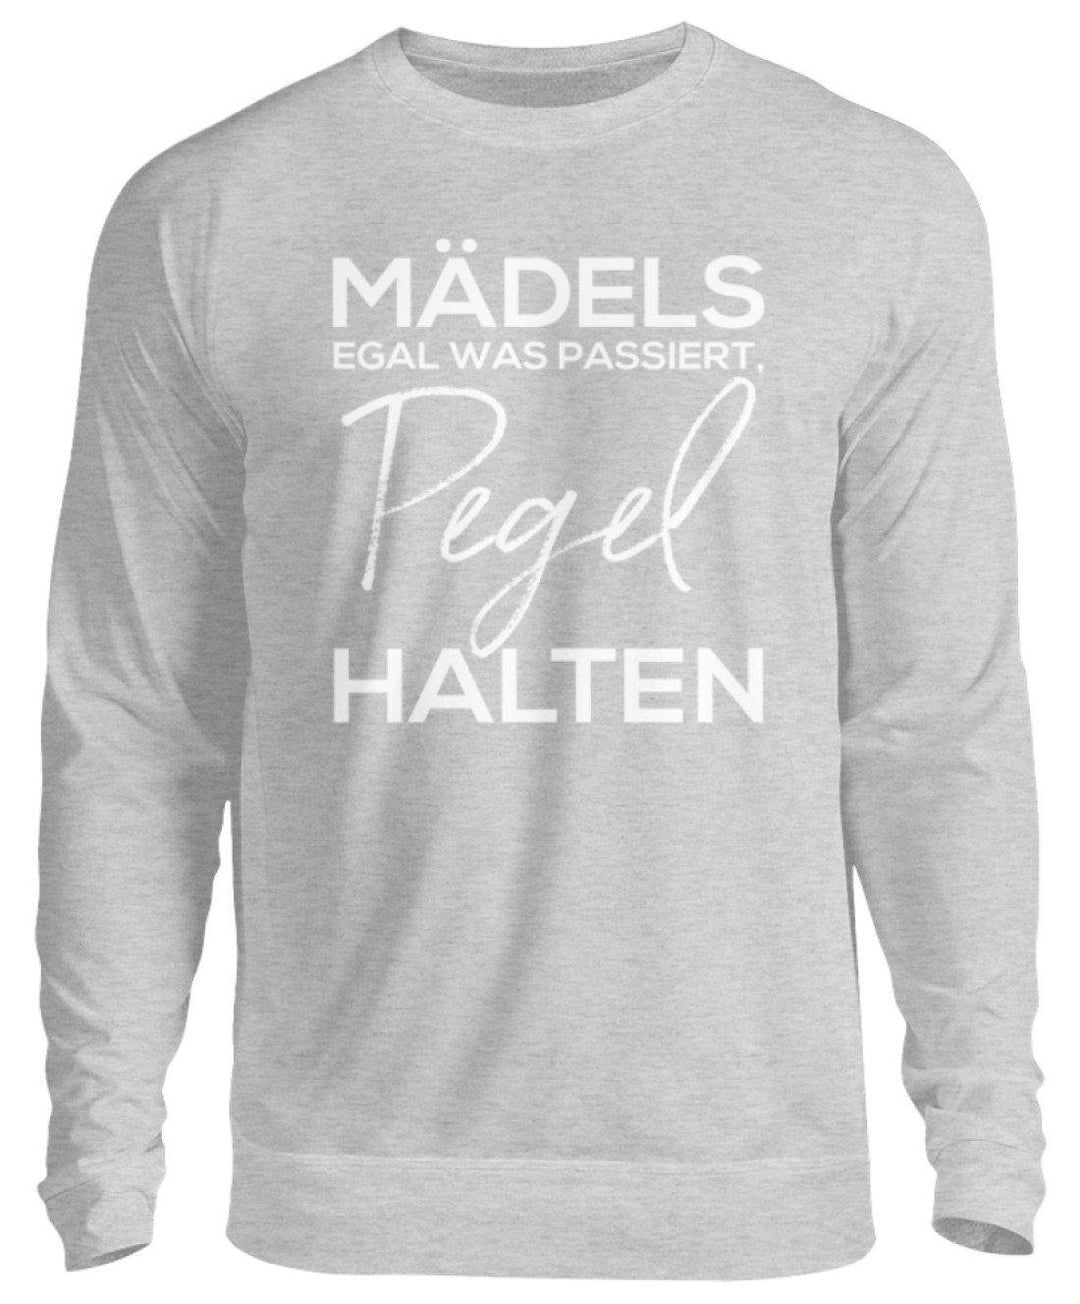 Mädels, Pegel halten.  - Unisex Pullover - Words on Shirts